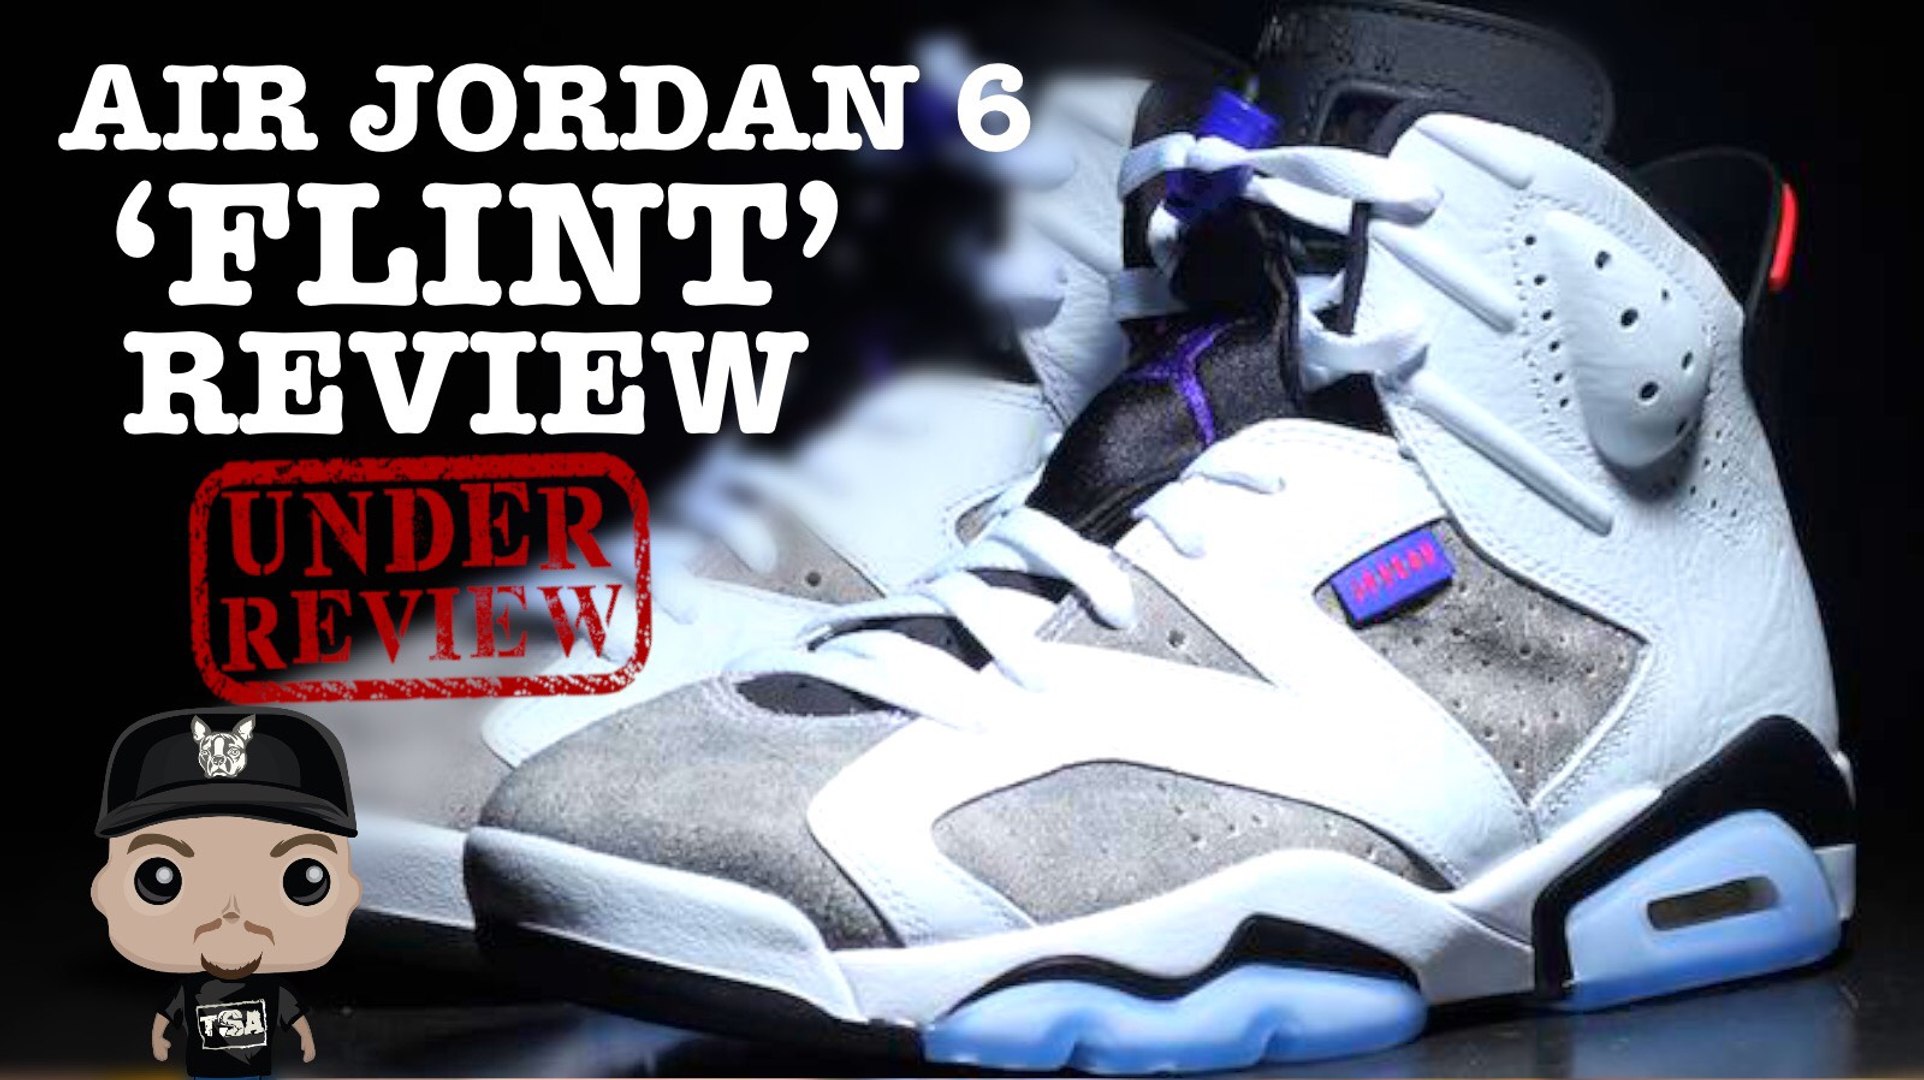 Air Jordan 6 Flint Retro Sneaker Honest Detailed Review - video Dailymotion